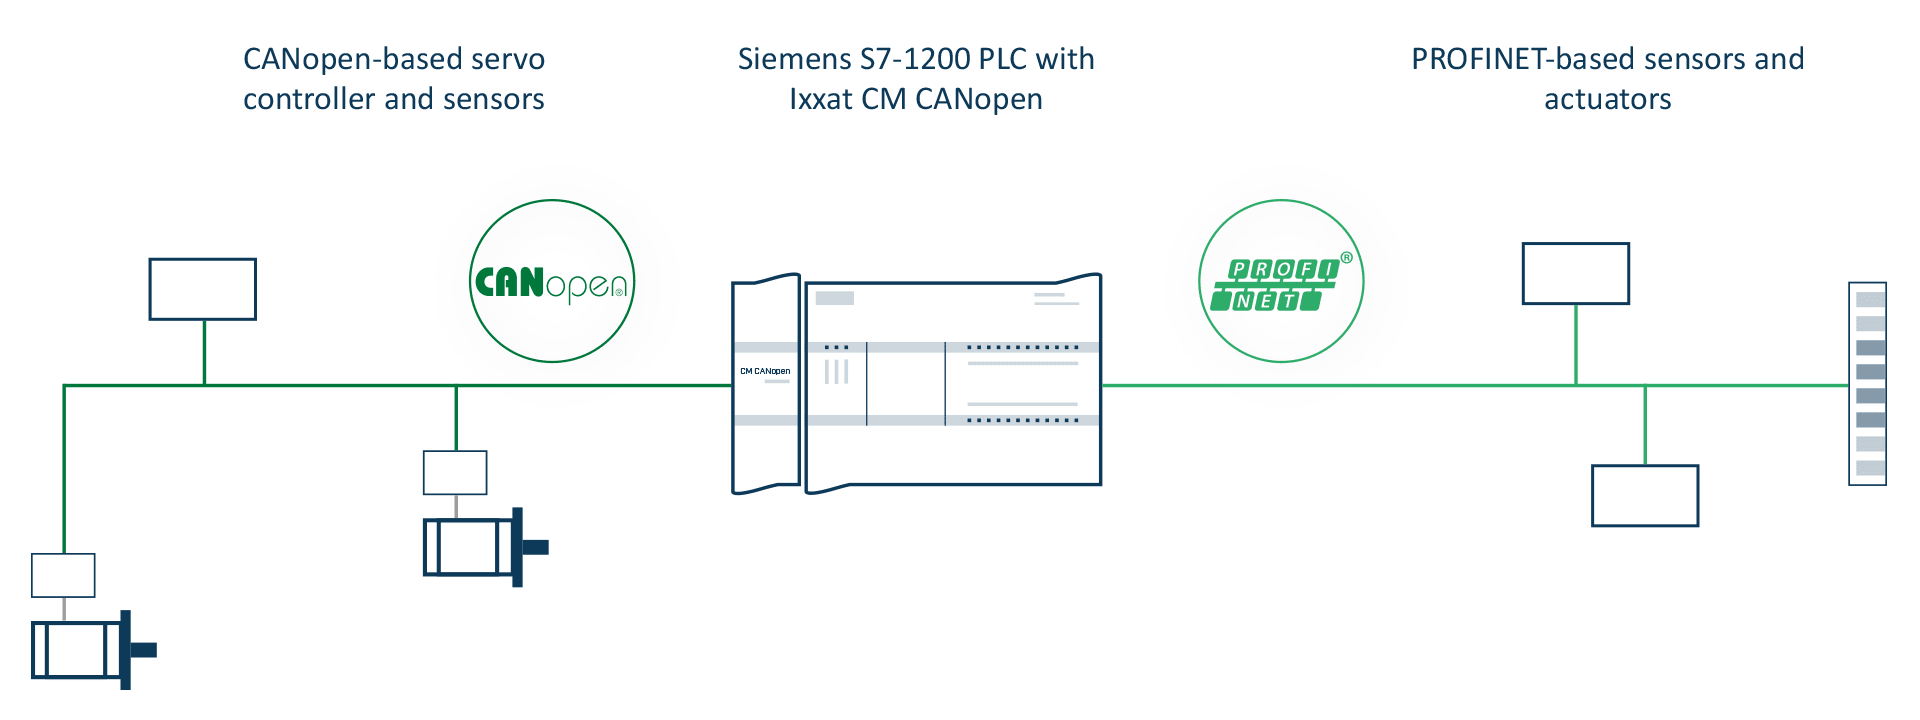 CANopen bus as a backbone network in a Siemens PLC environment